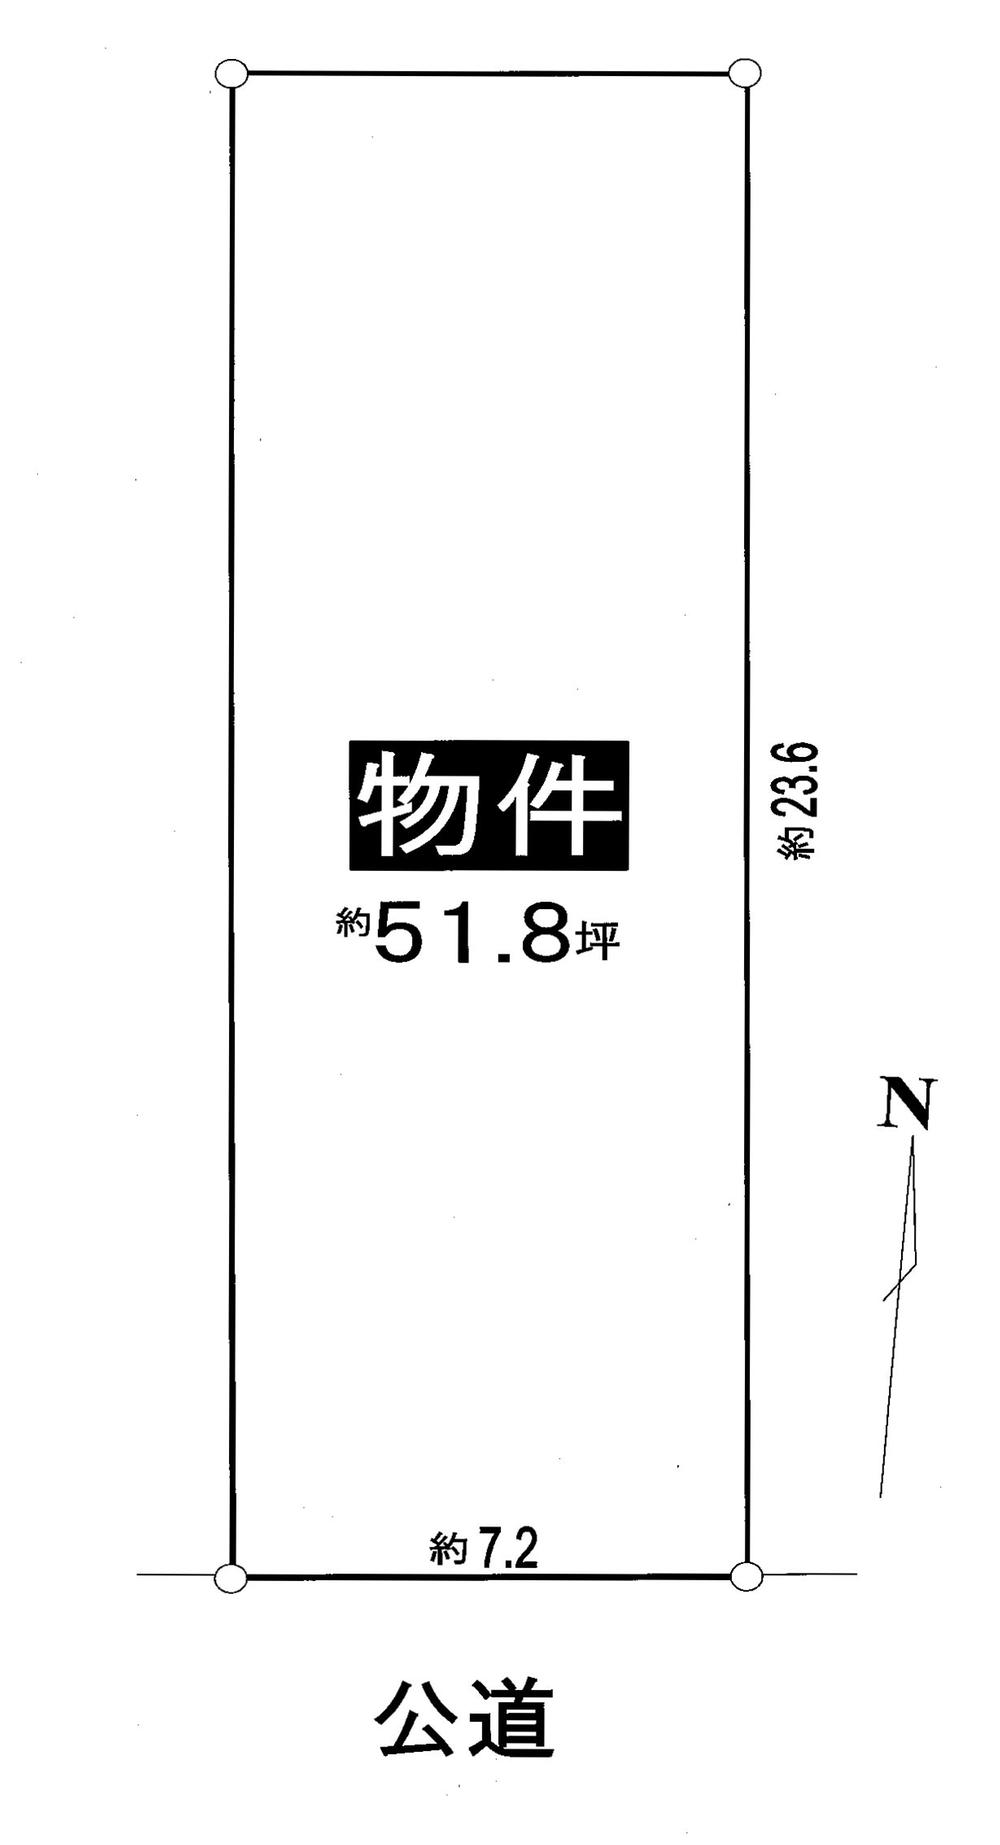 Compartment figure. Land price 18,680,000 yen, Land area 171.5 sq m